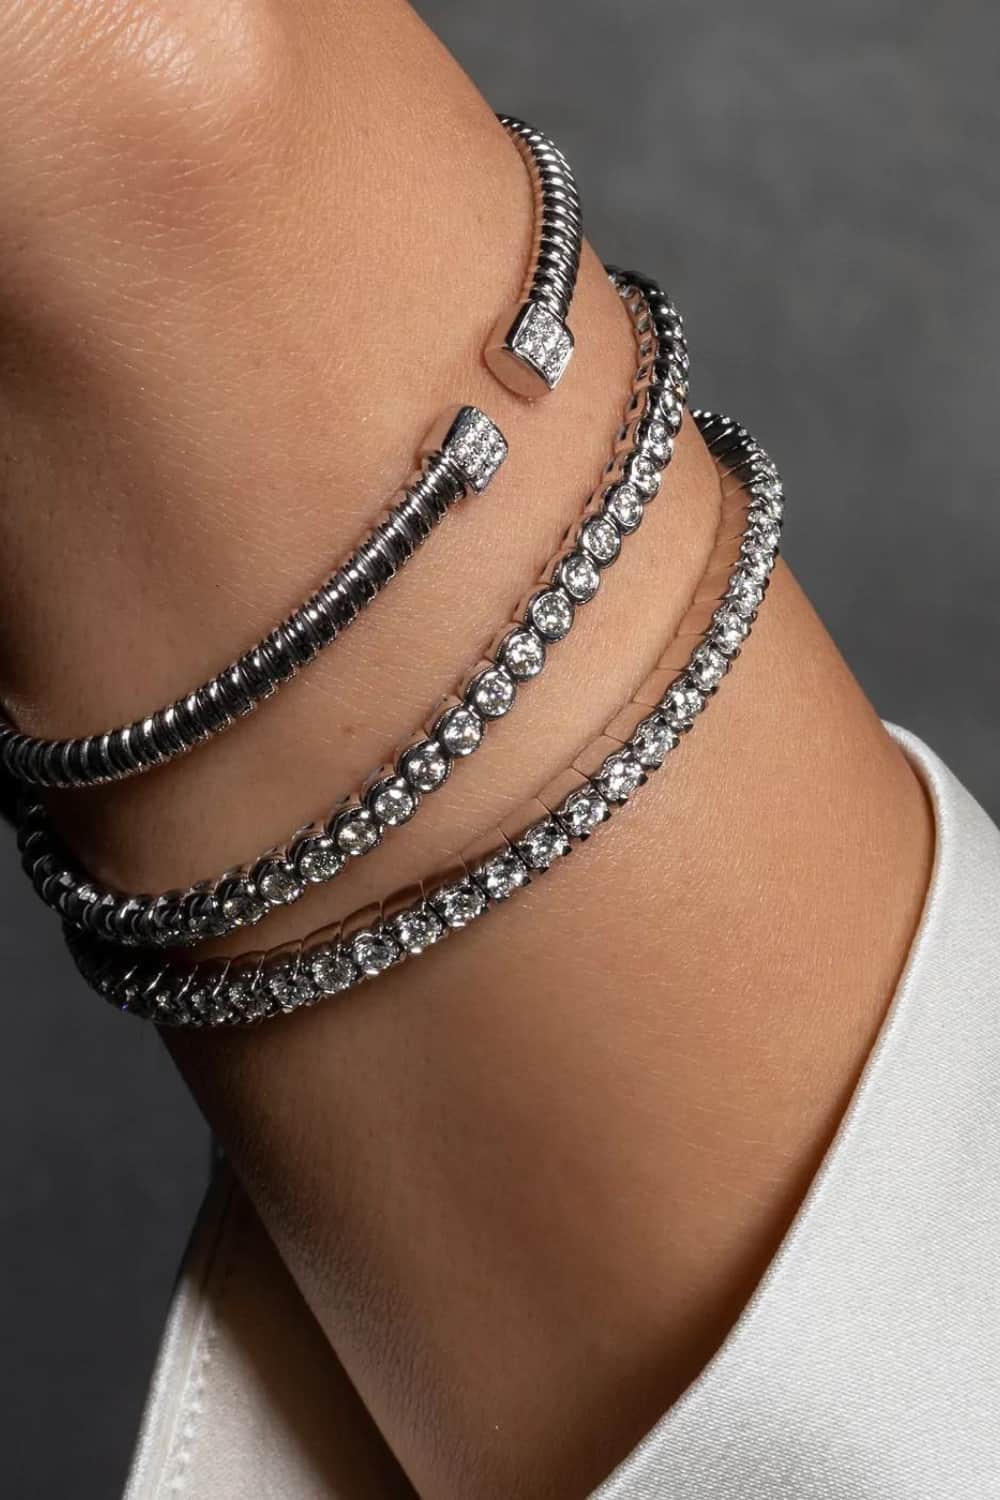 Stack diamond and silver bracelets together